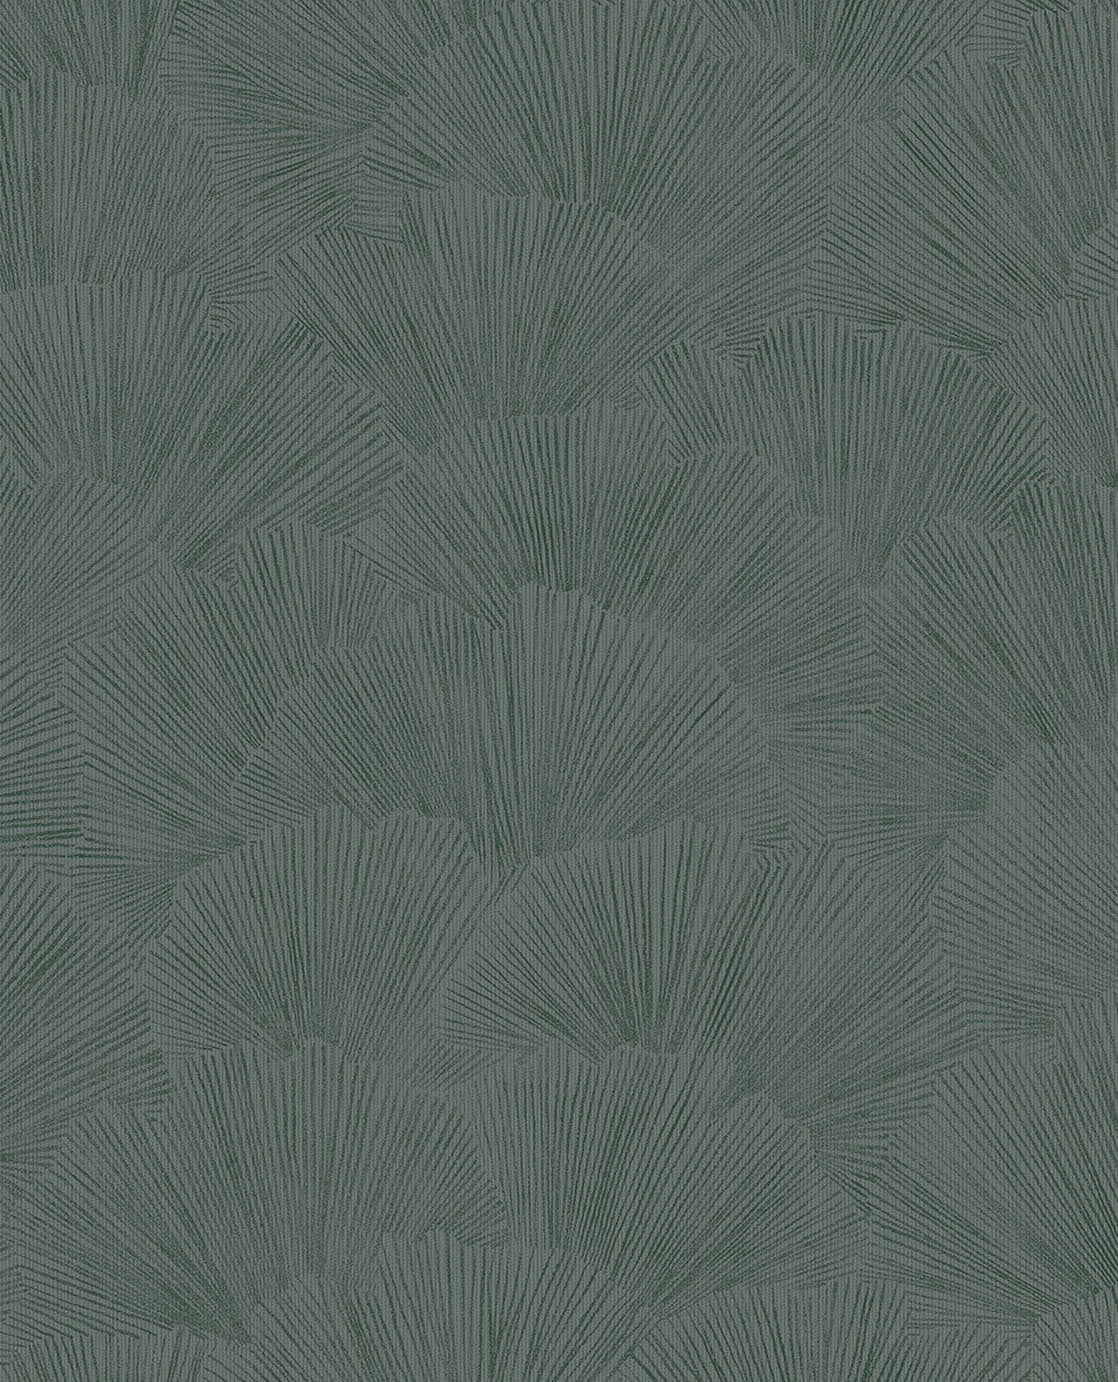 Ginkgo Leaves - Dark Green